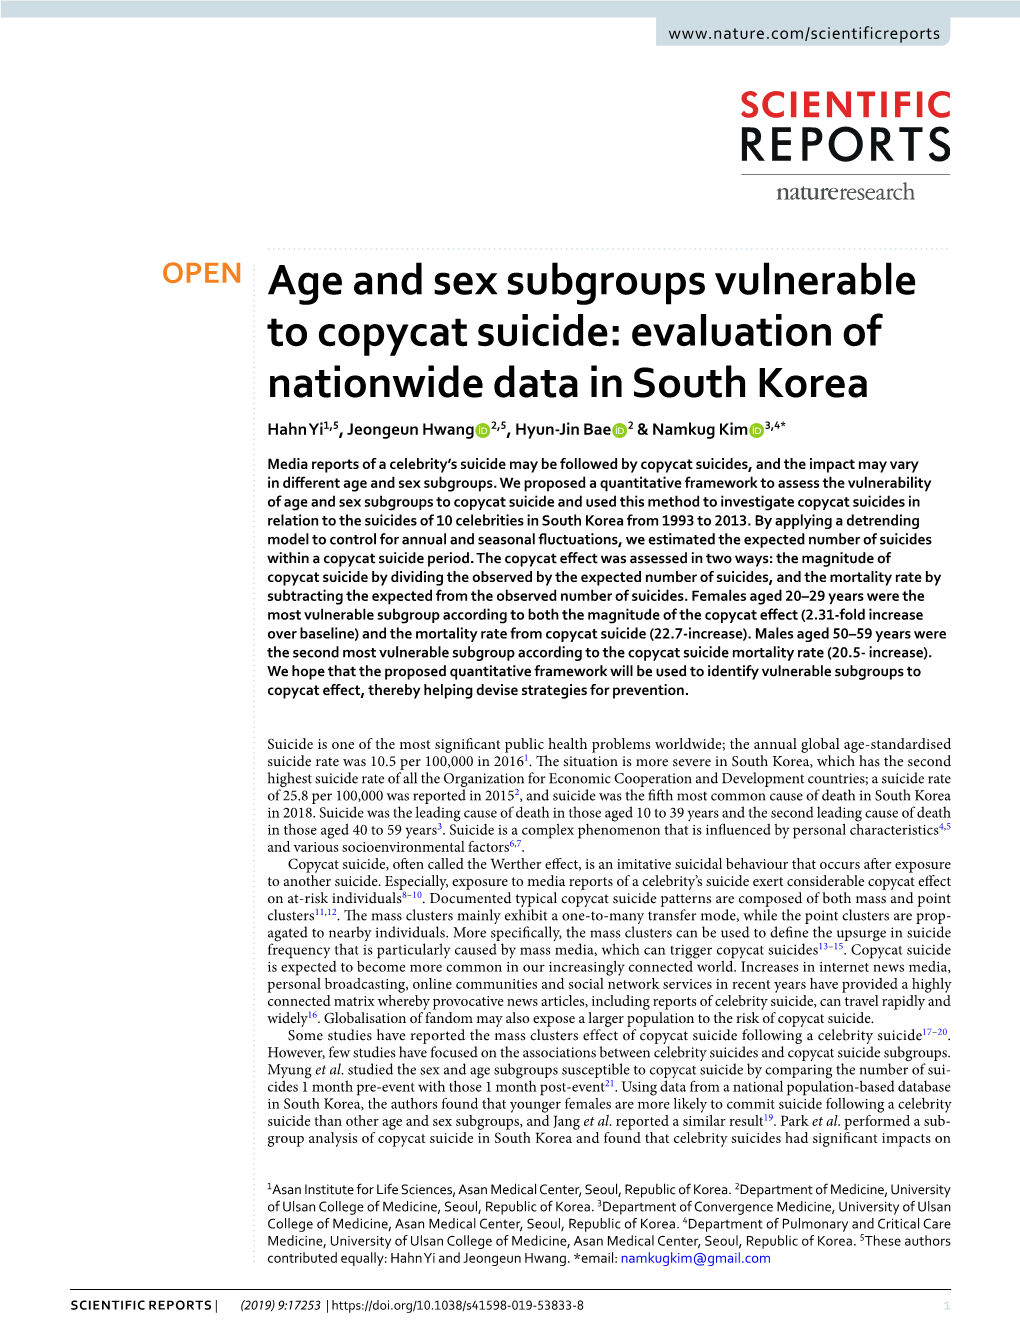 Age and Sex Subgroups Vulnerable to Copycat Suicide: Evaluation of Nationwide Data in South Korea Hahn Yi1,5, Jeongeun Hwang 2,5, Hyun-Jin Bae 2 & Namkug Kim 3,4*